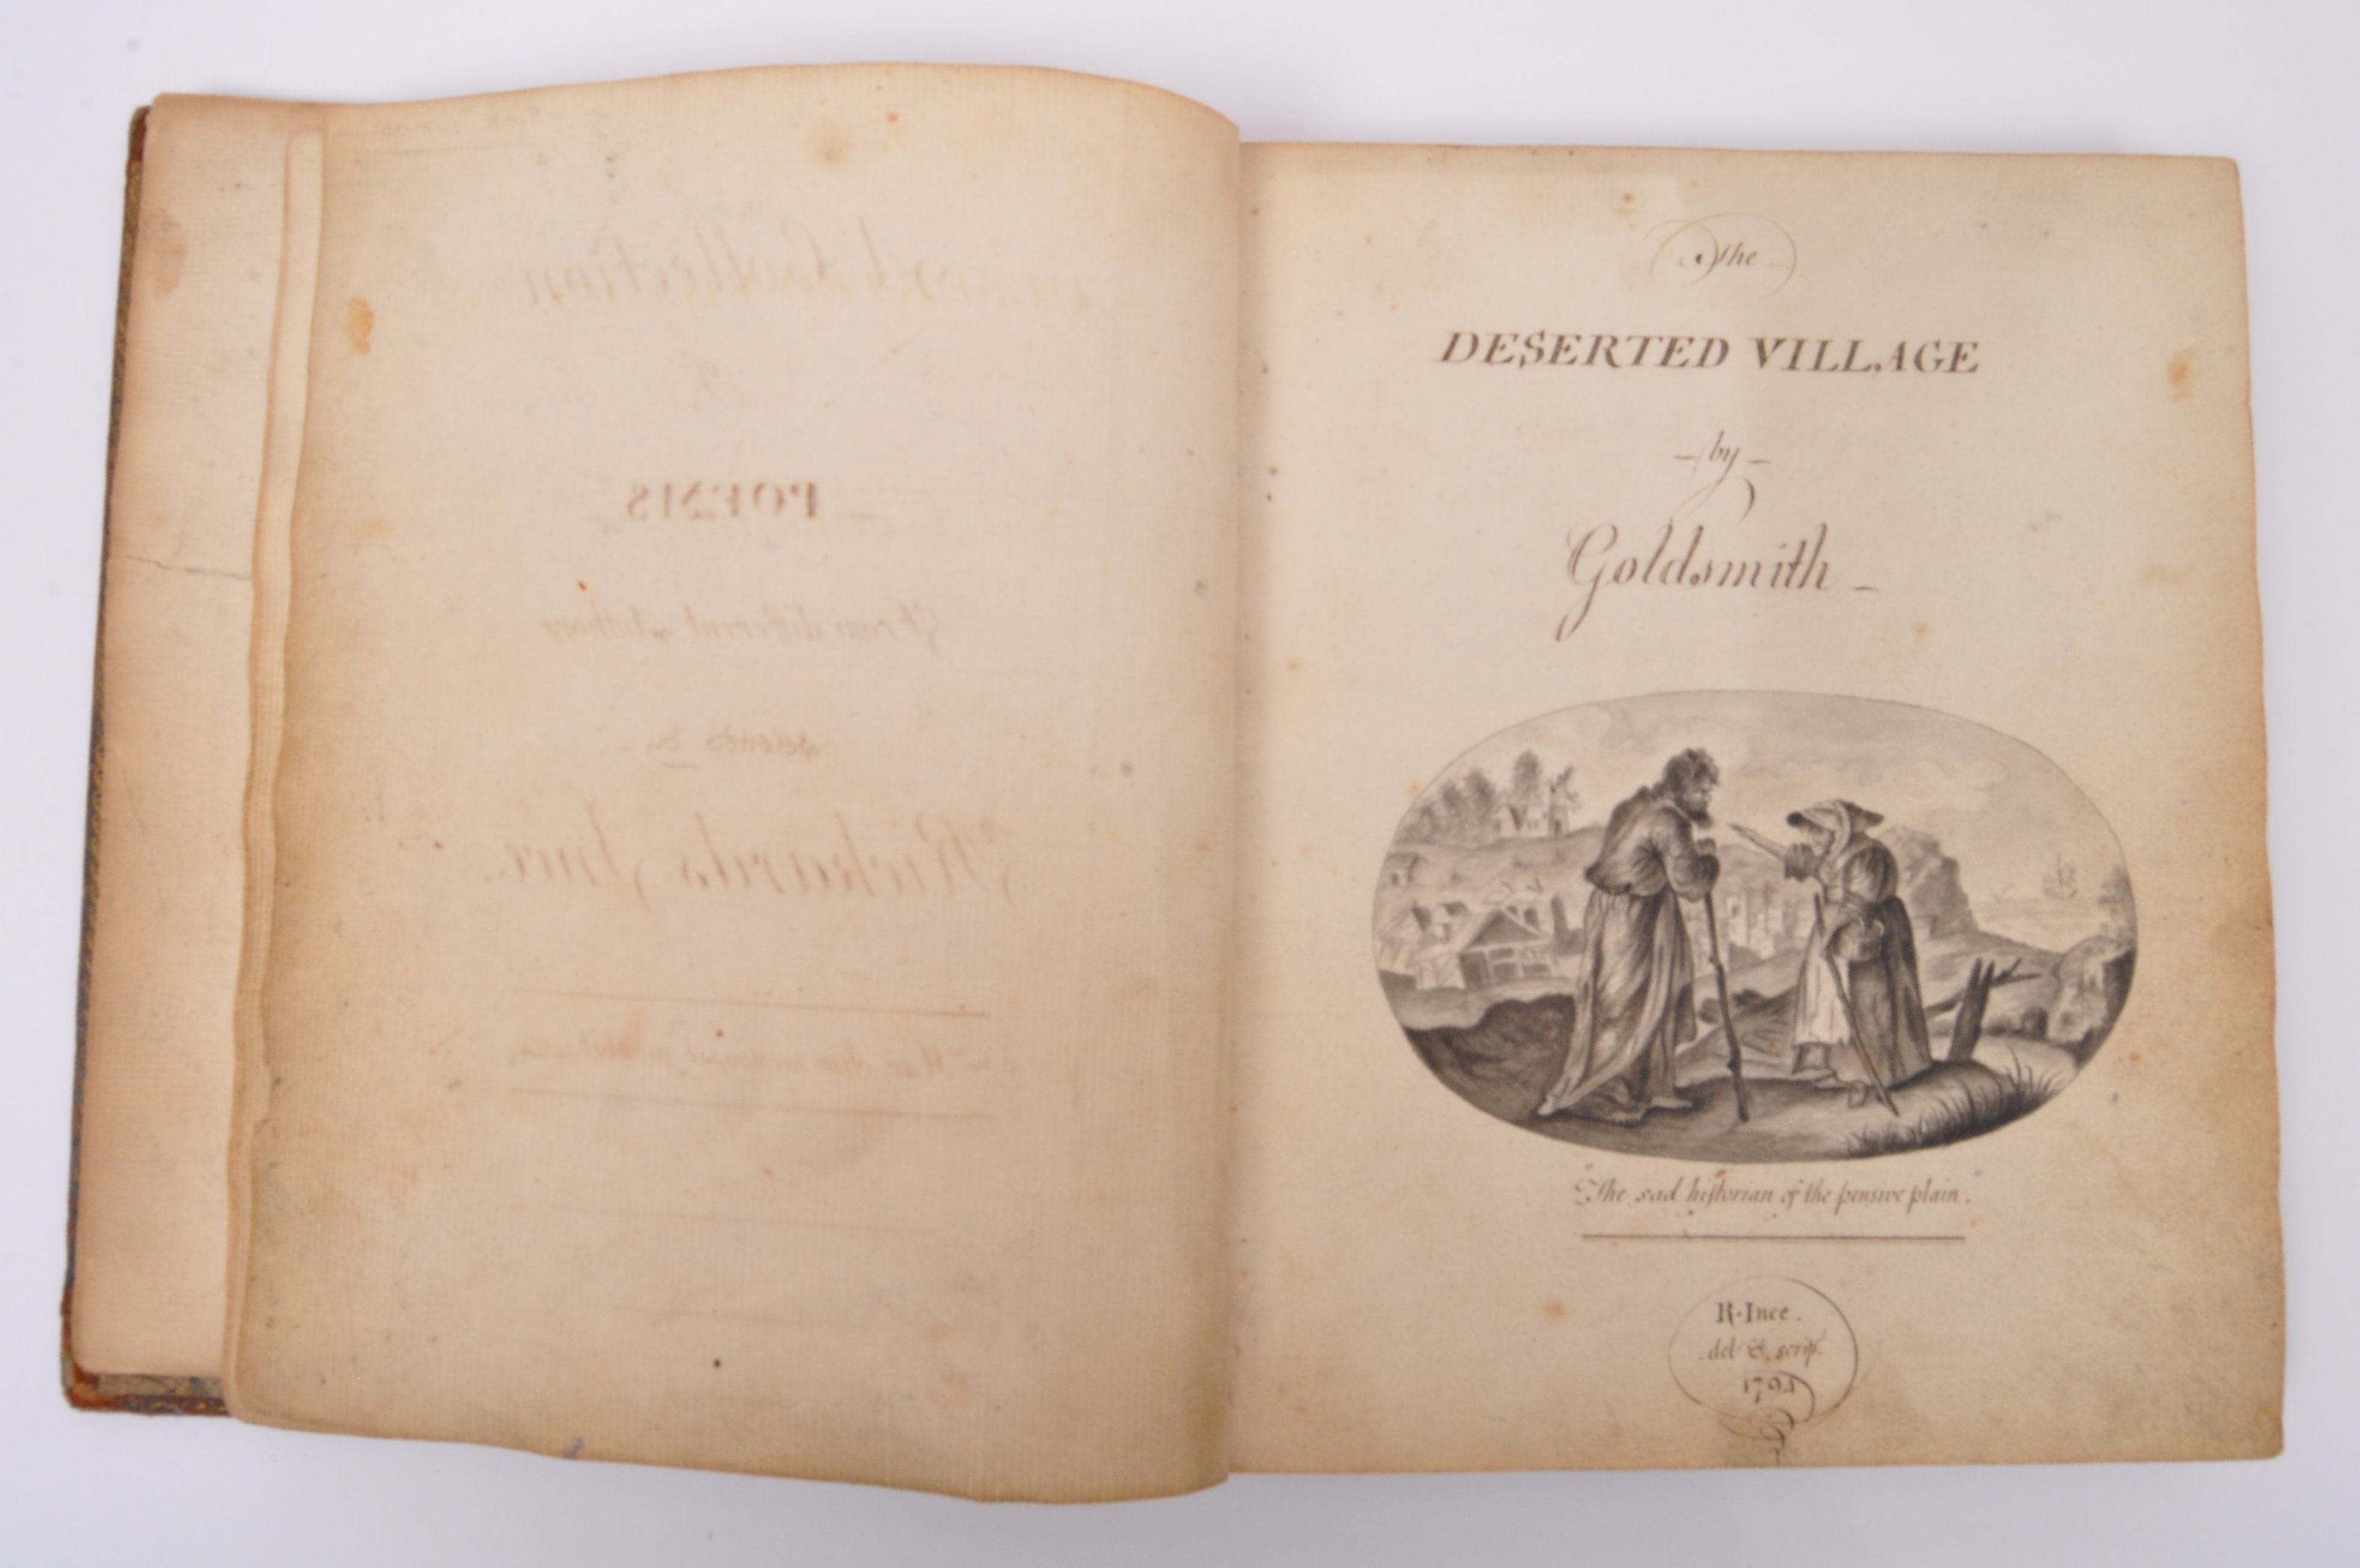 1794 - A COLLECTION OF POEMS - HANDWRITTEN MANUSCRIPT BOOK